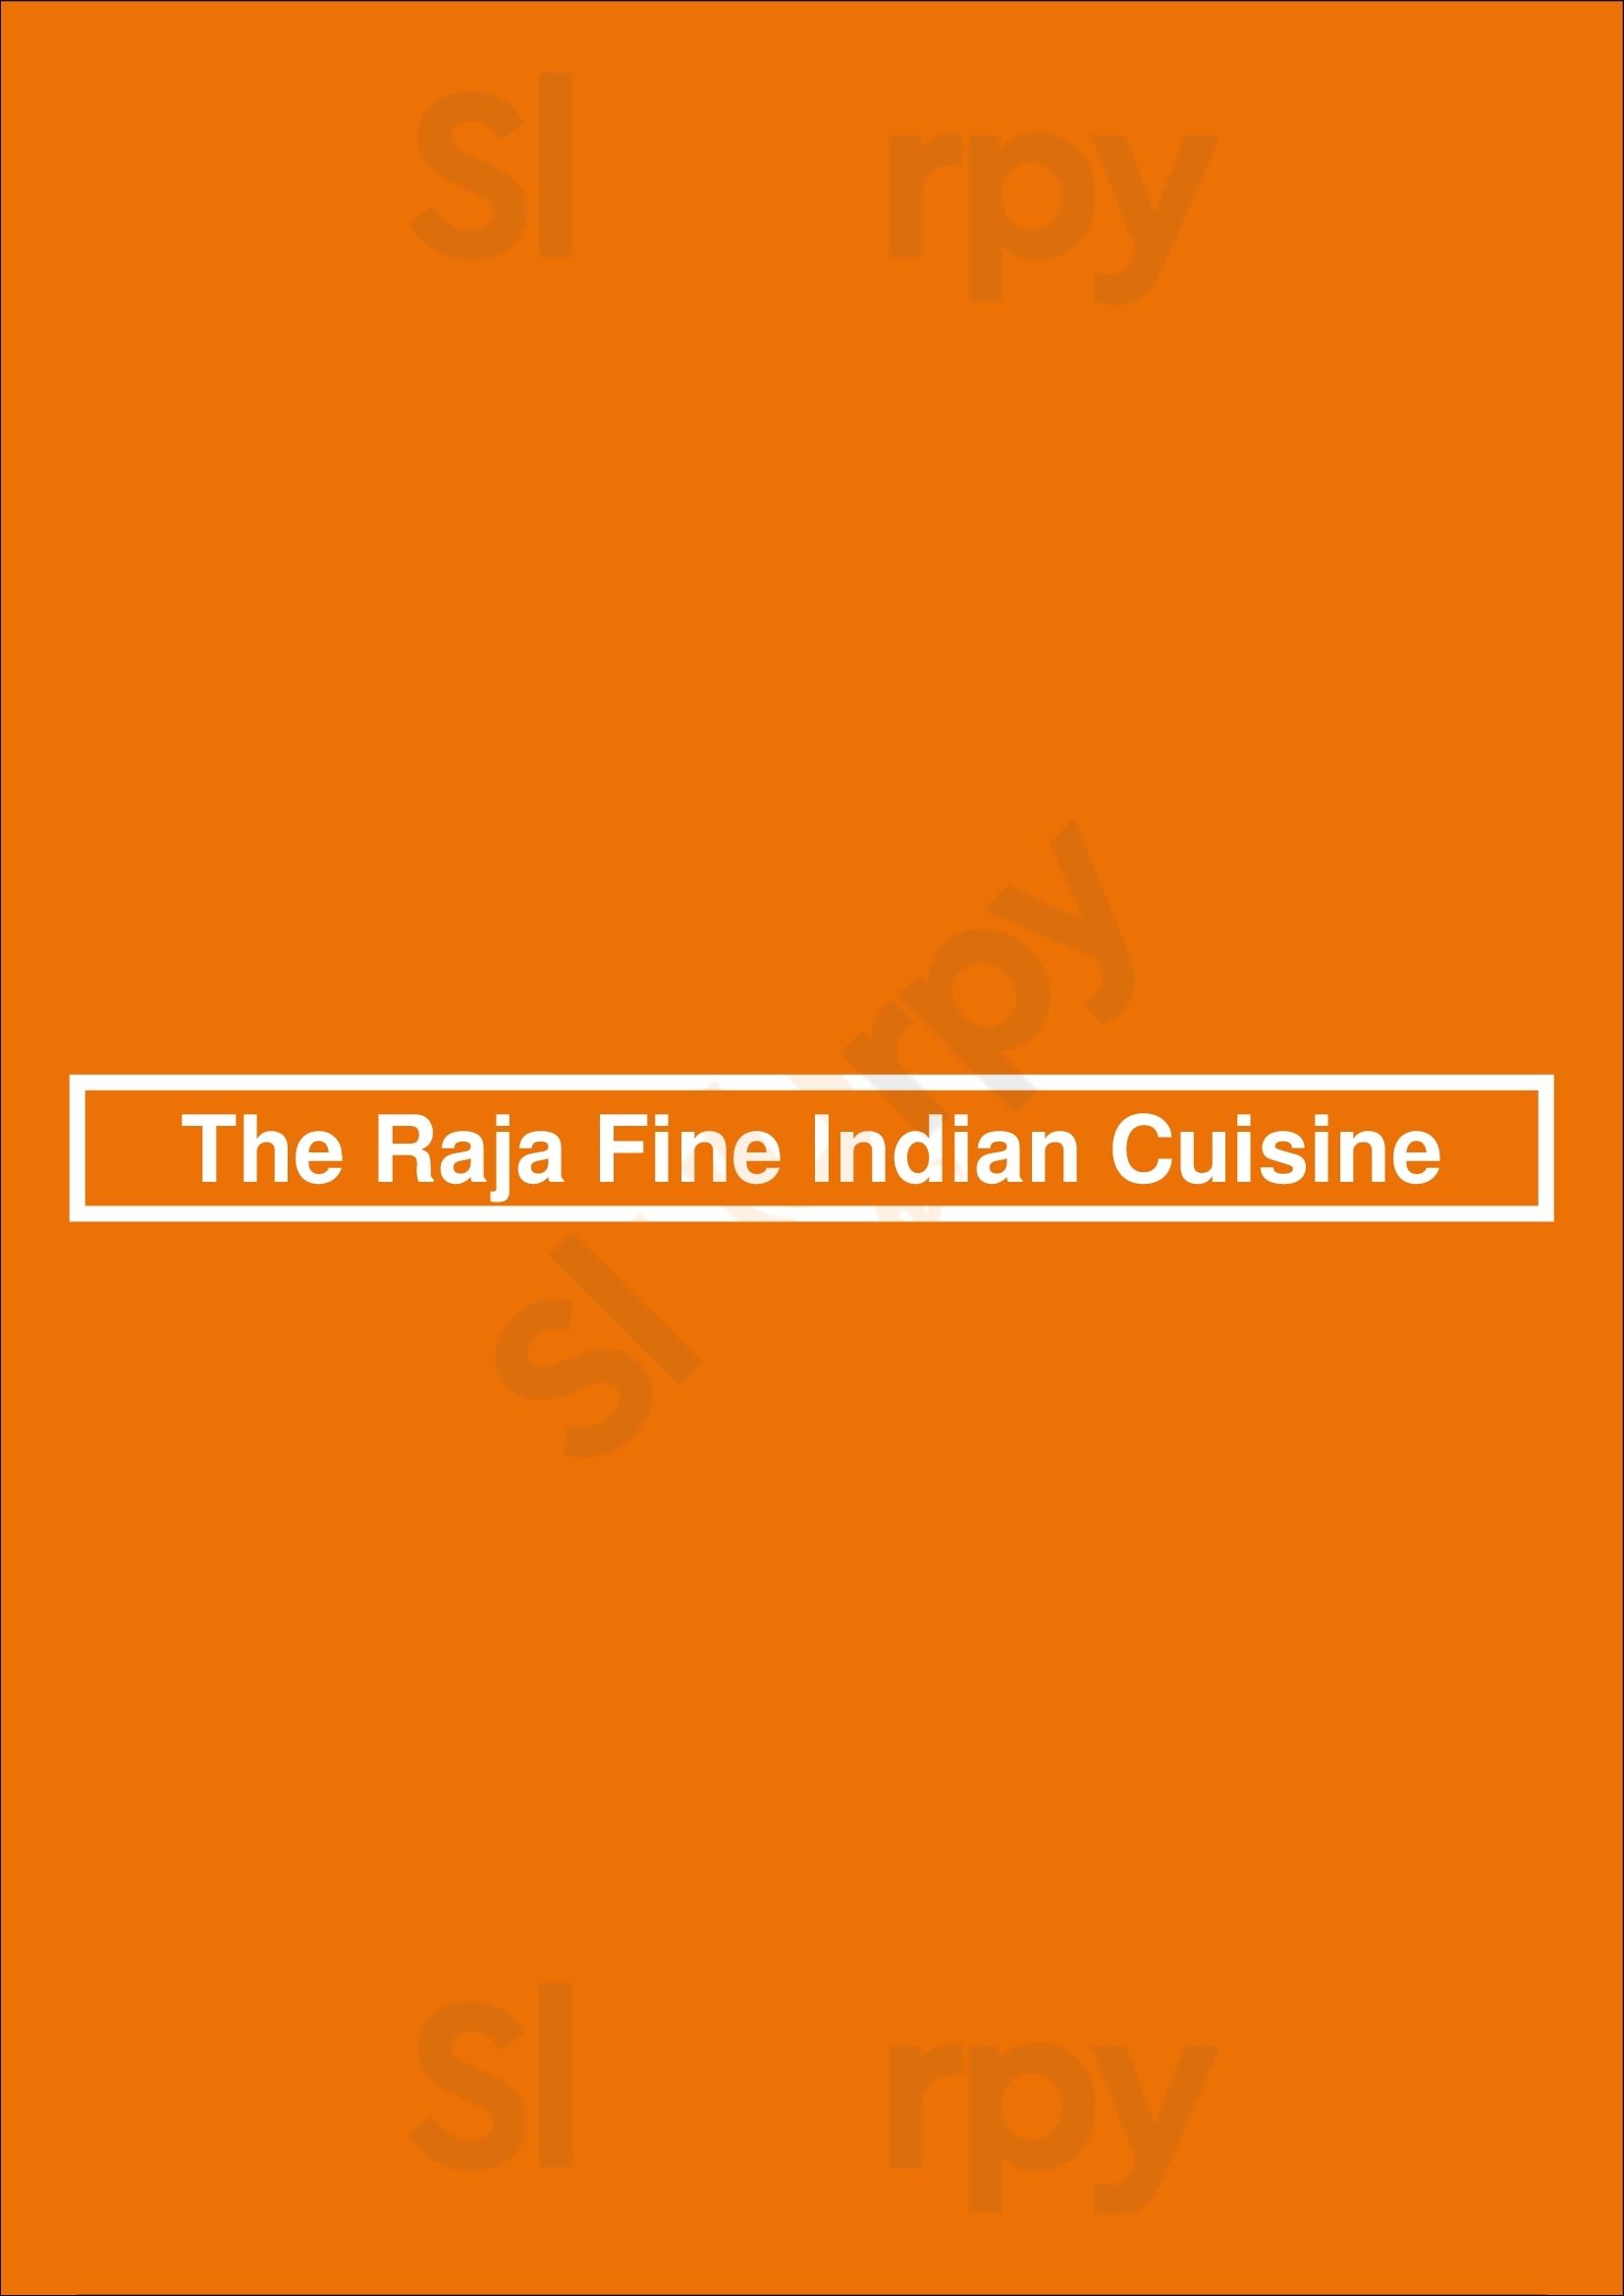 The Raja Fine Indian Cuisine London Menu - 1